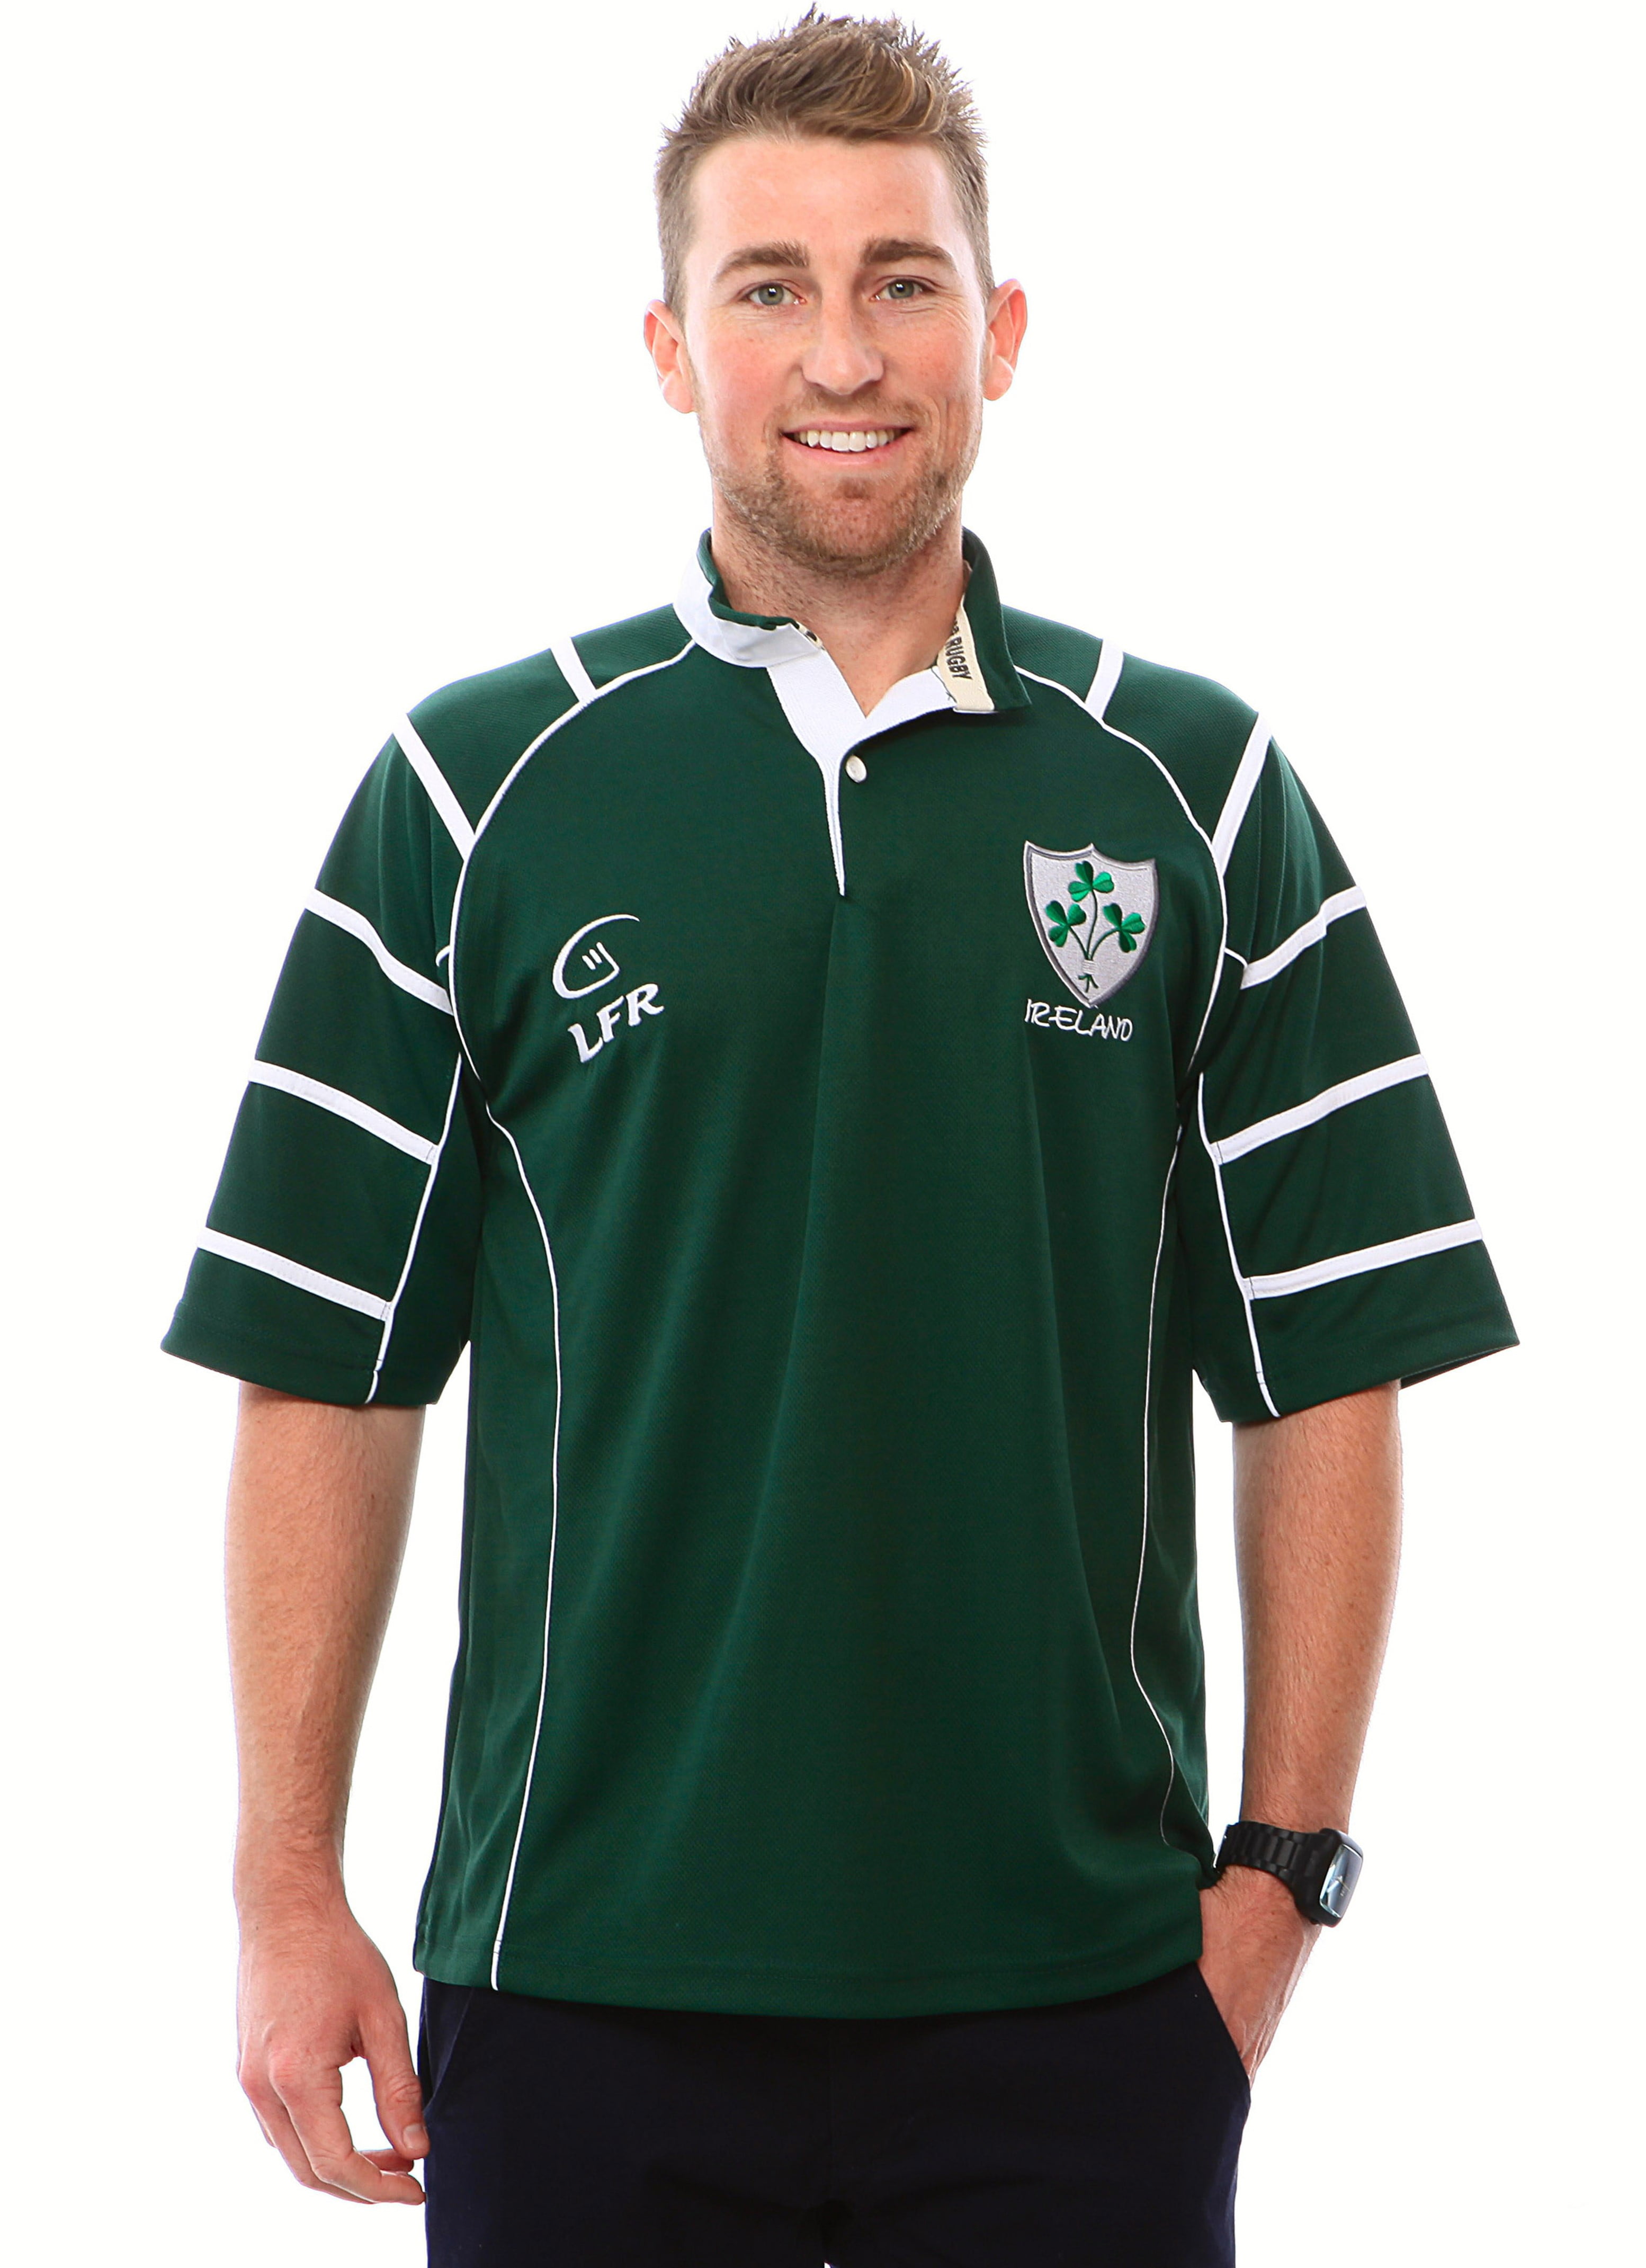 Activewear Ireland Irish Rugby Ireland Full Sleeve Supporter Shirts Size S to 3XL